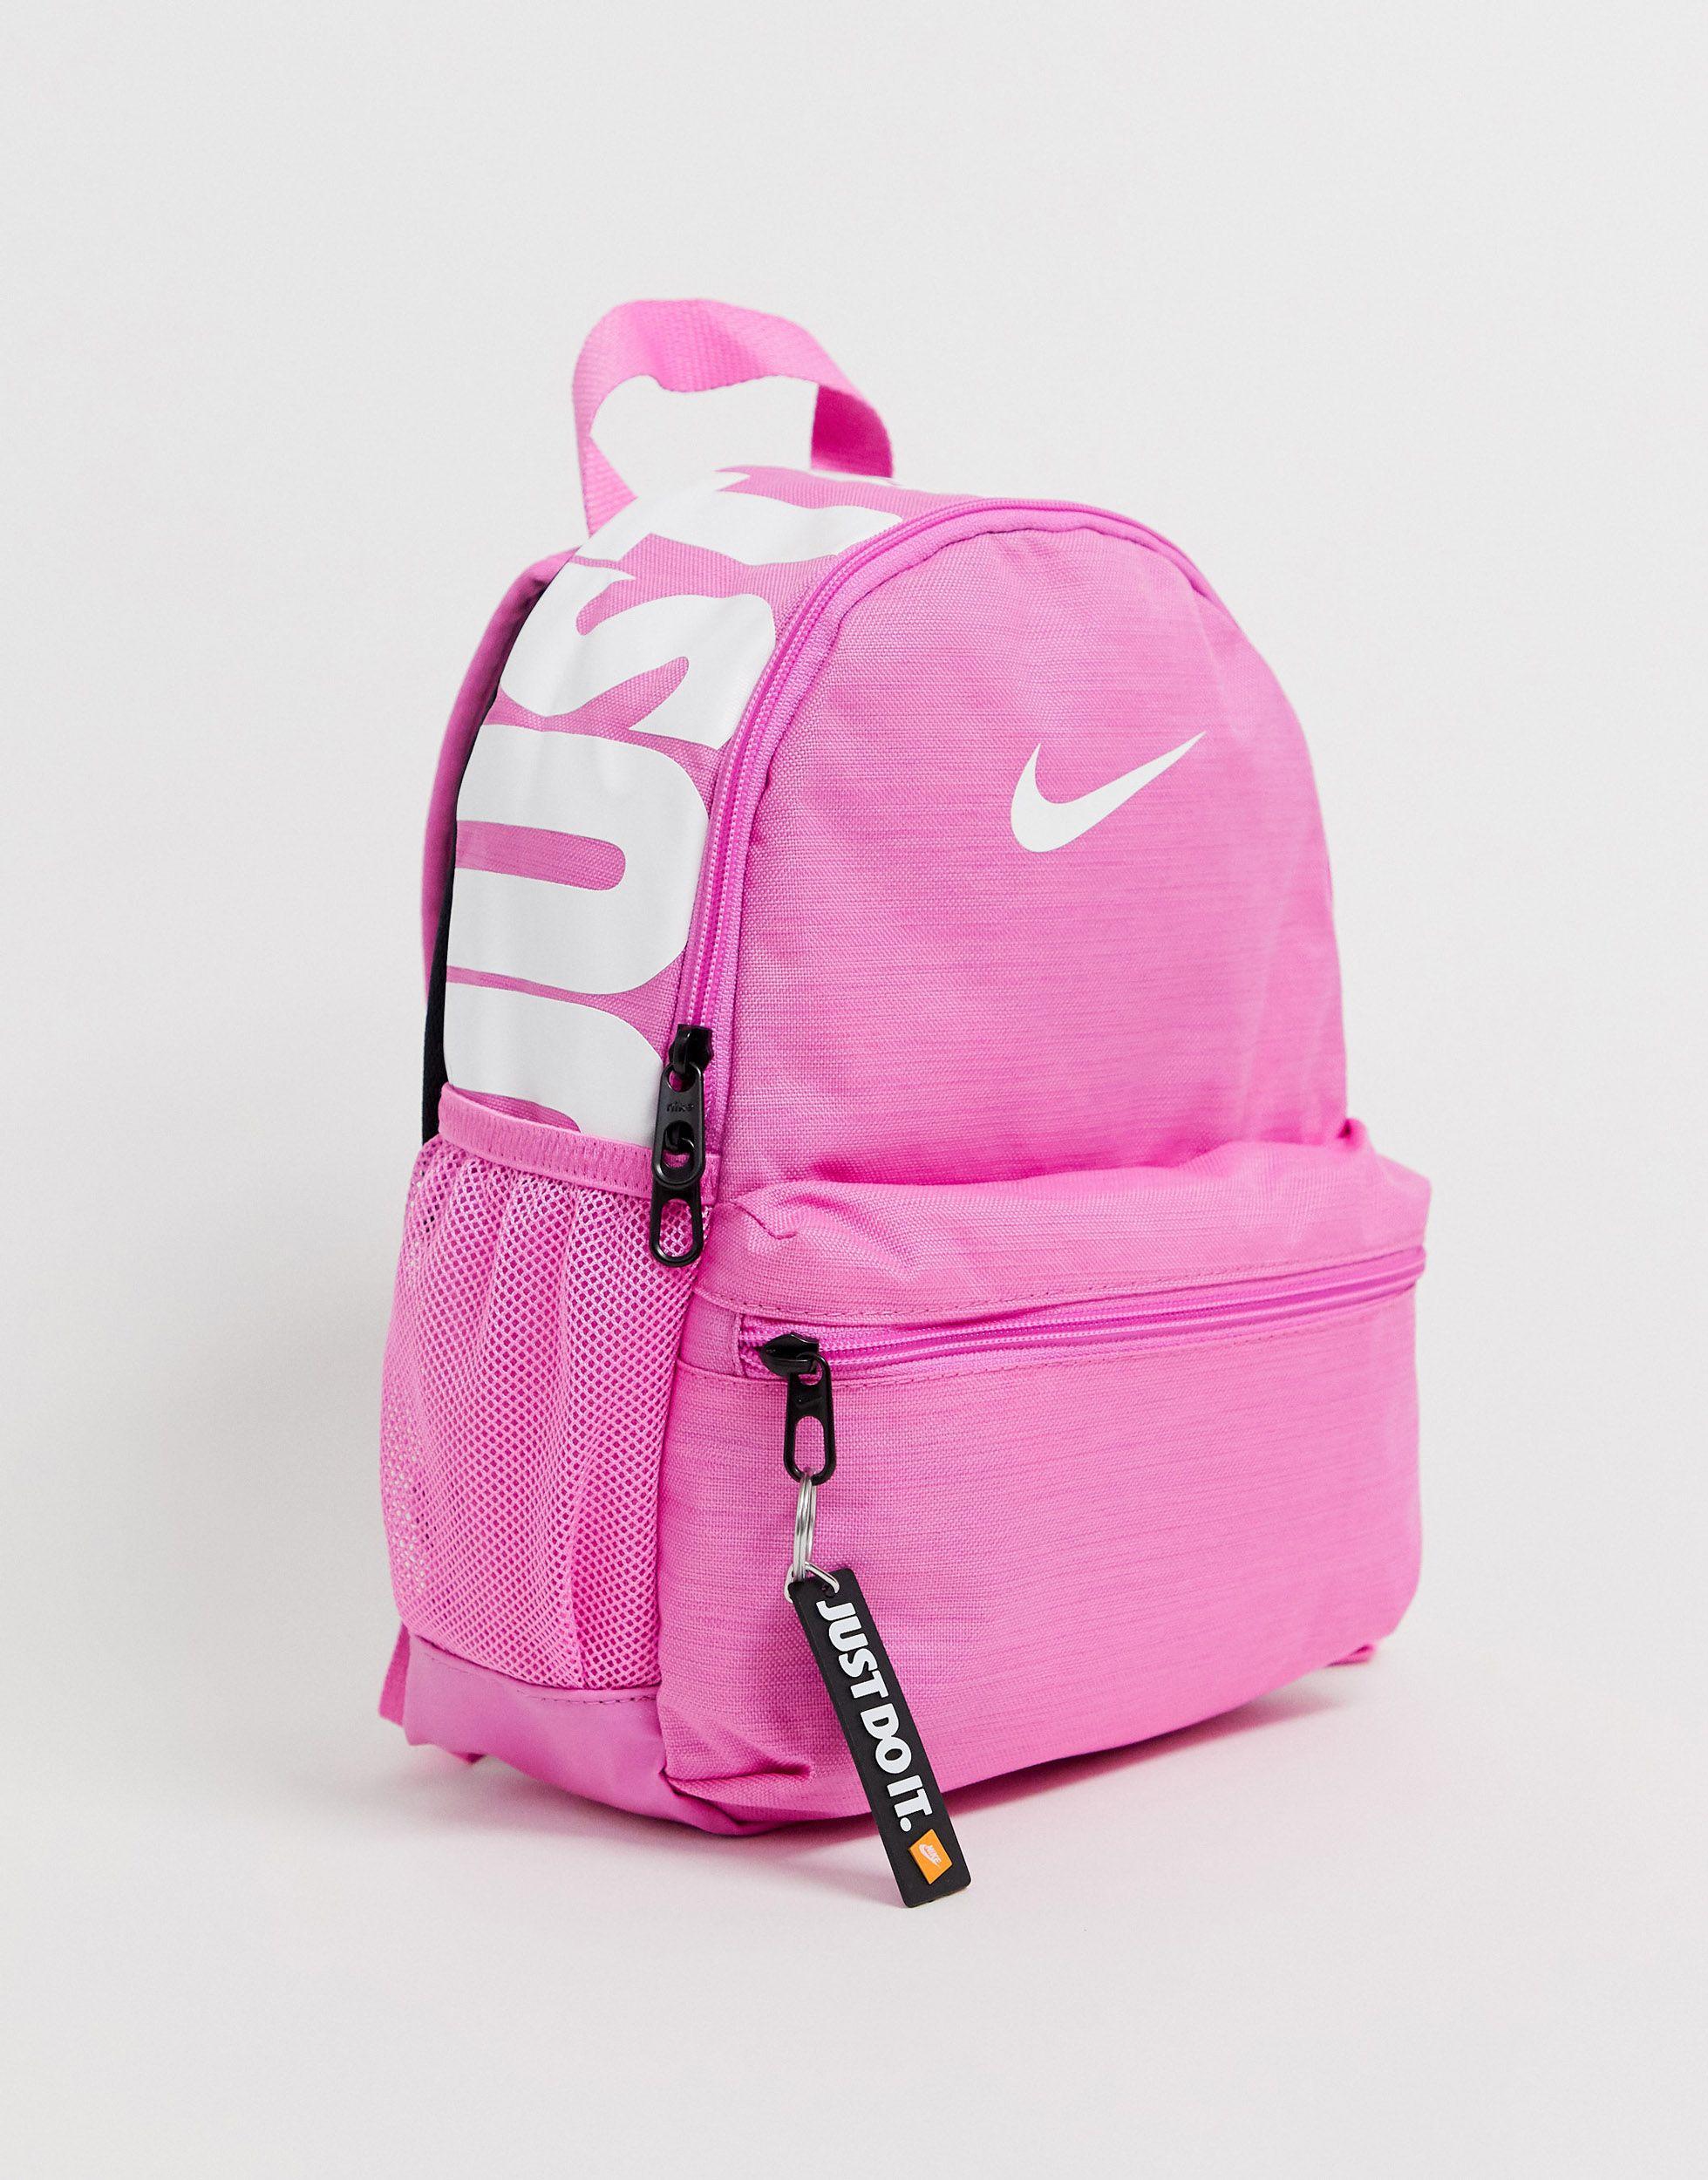 Just Do It - Mini sac à dos Toile Nike en coloris Rose - Lyst